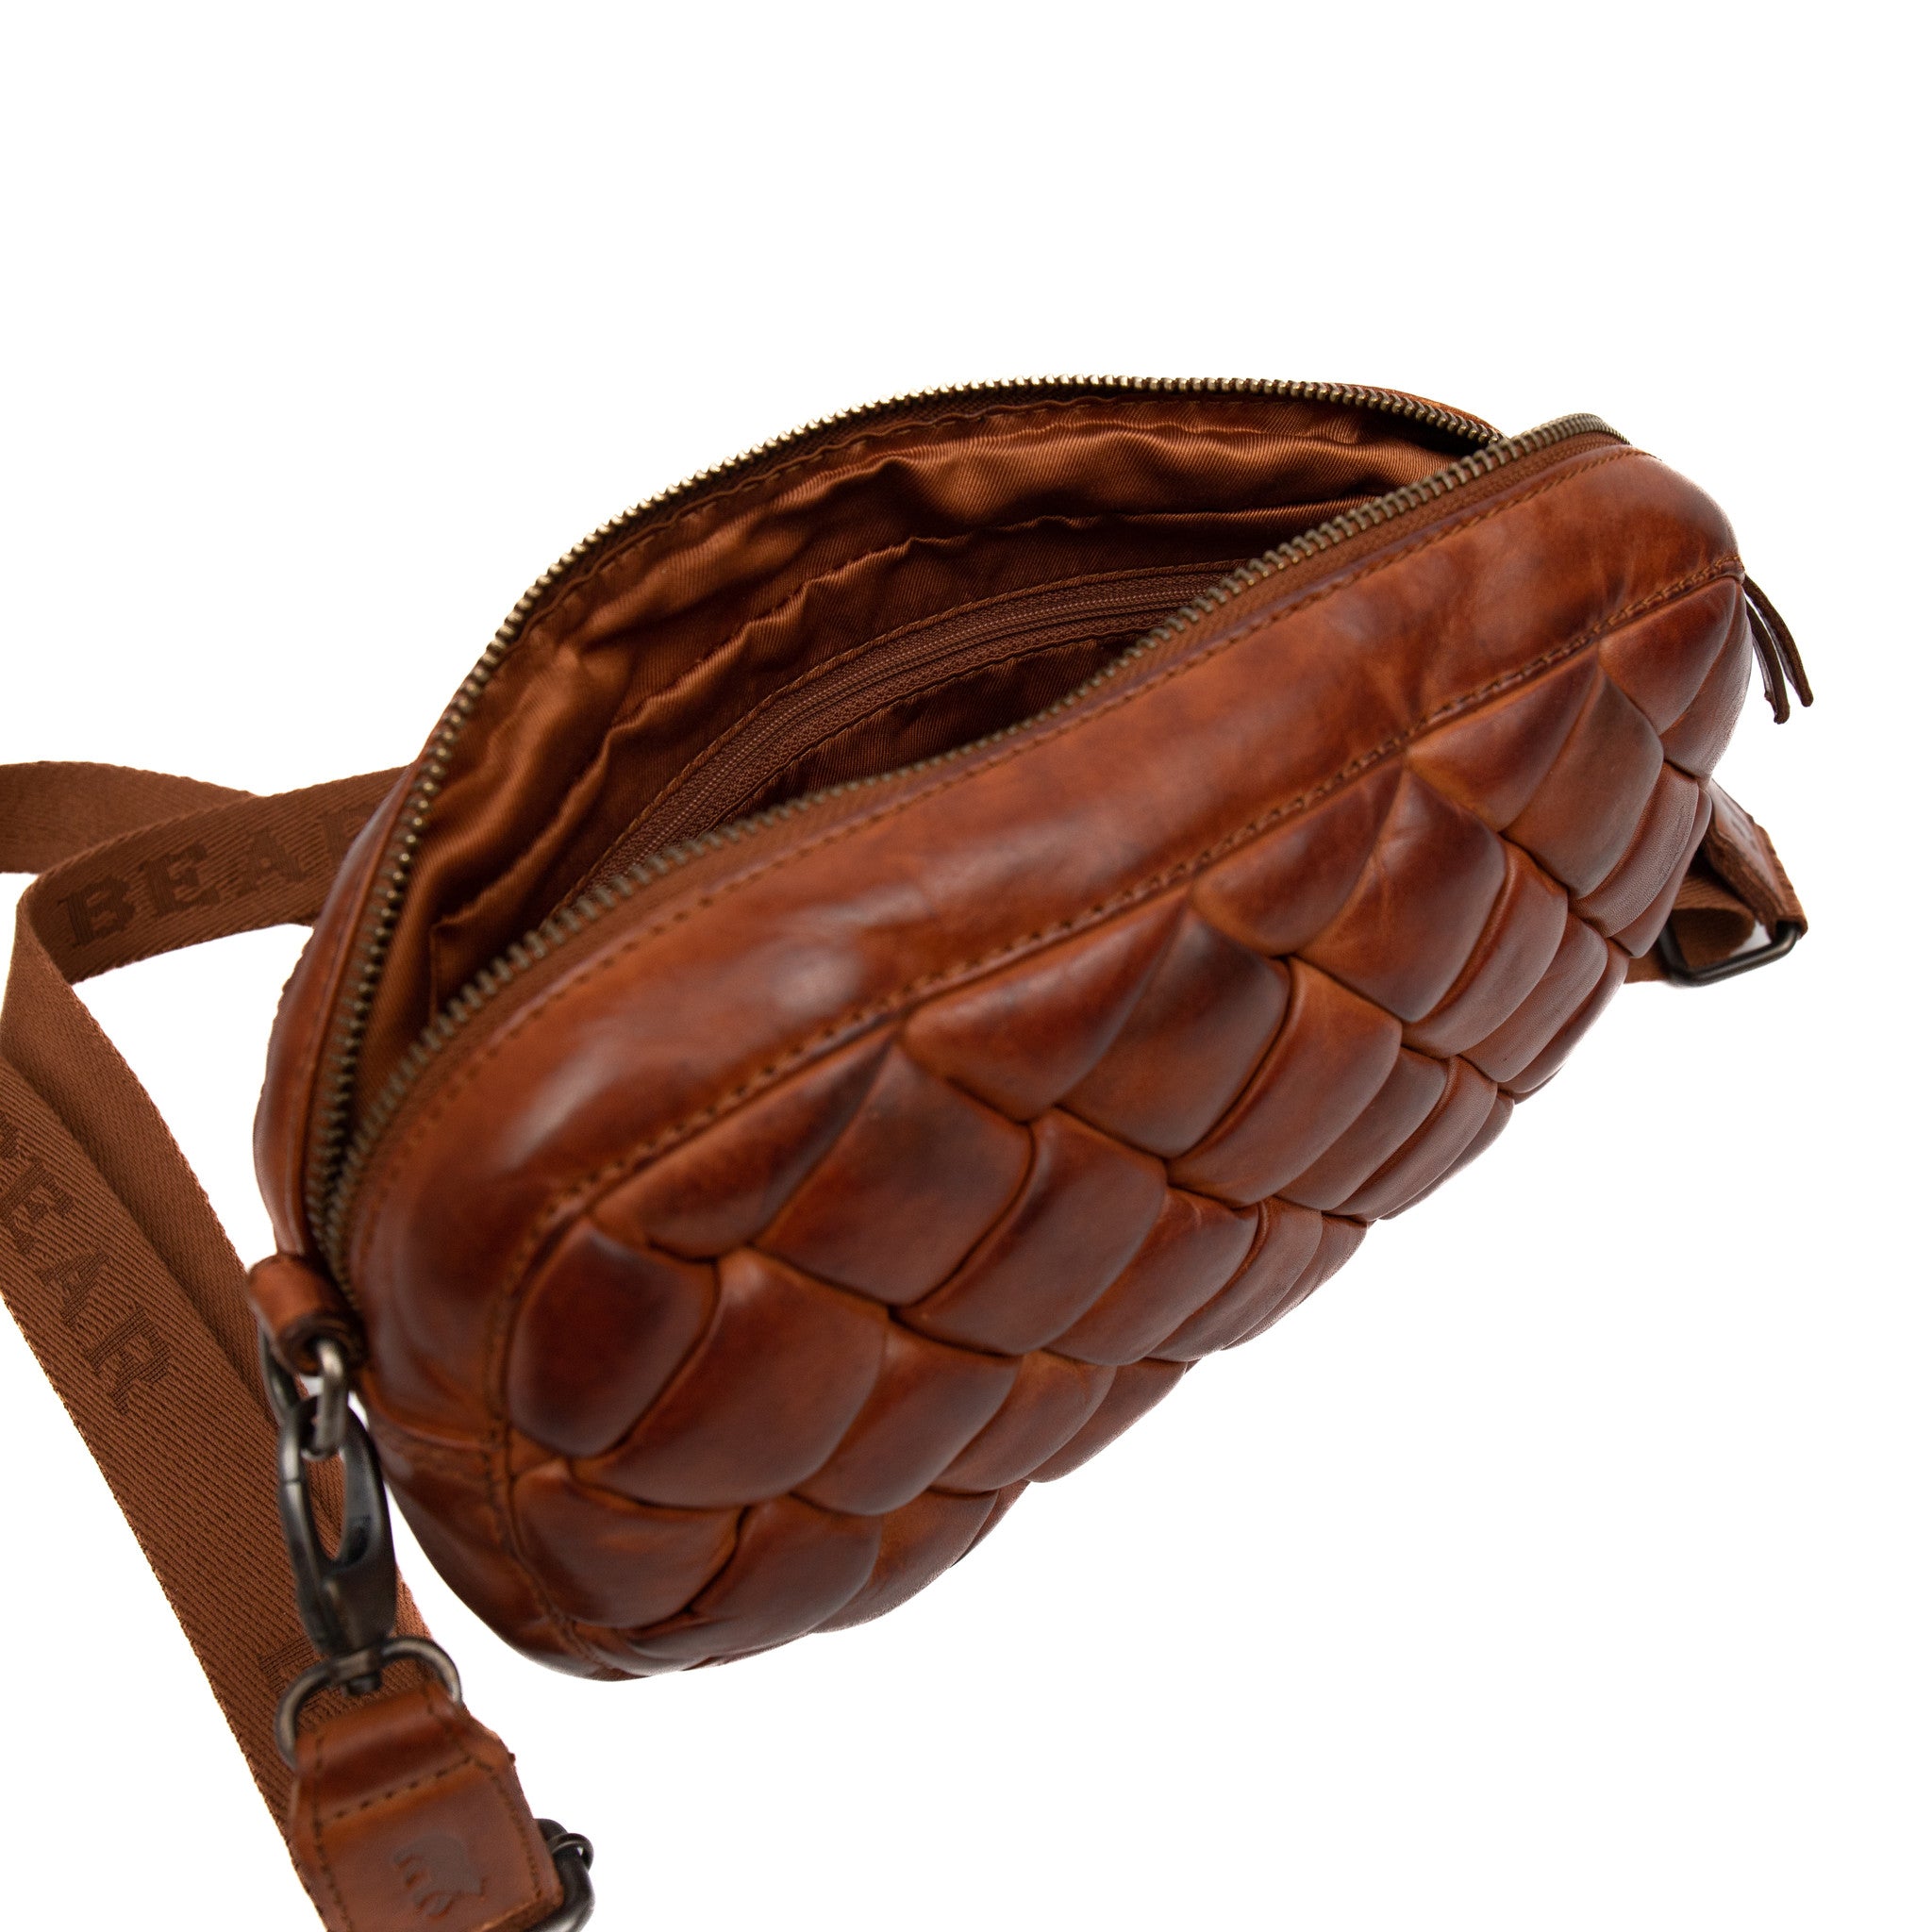 Braided shoulder bag 'Yuna' cognac - CL 42905